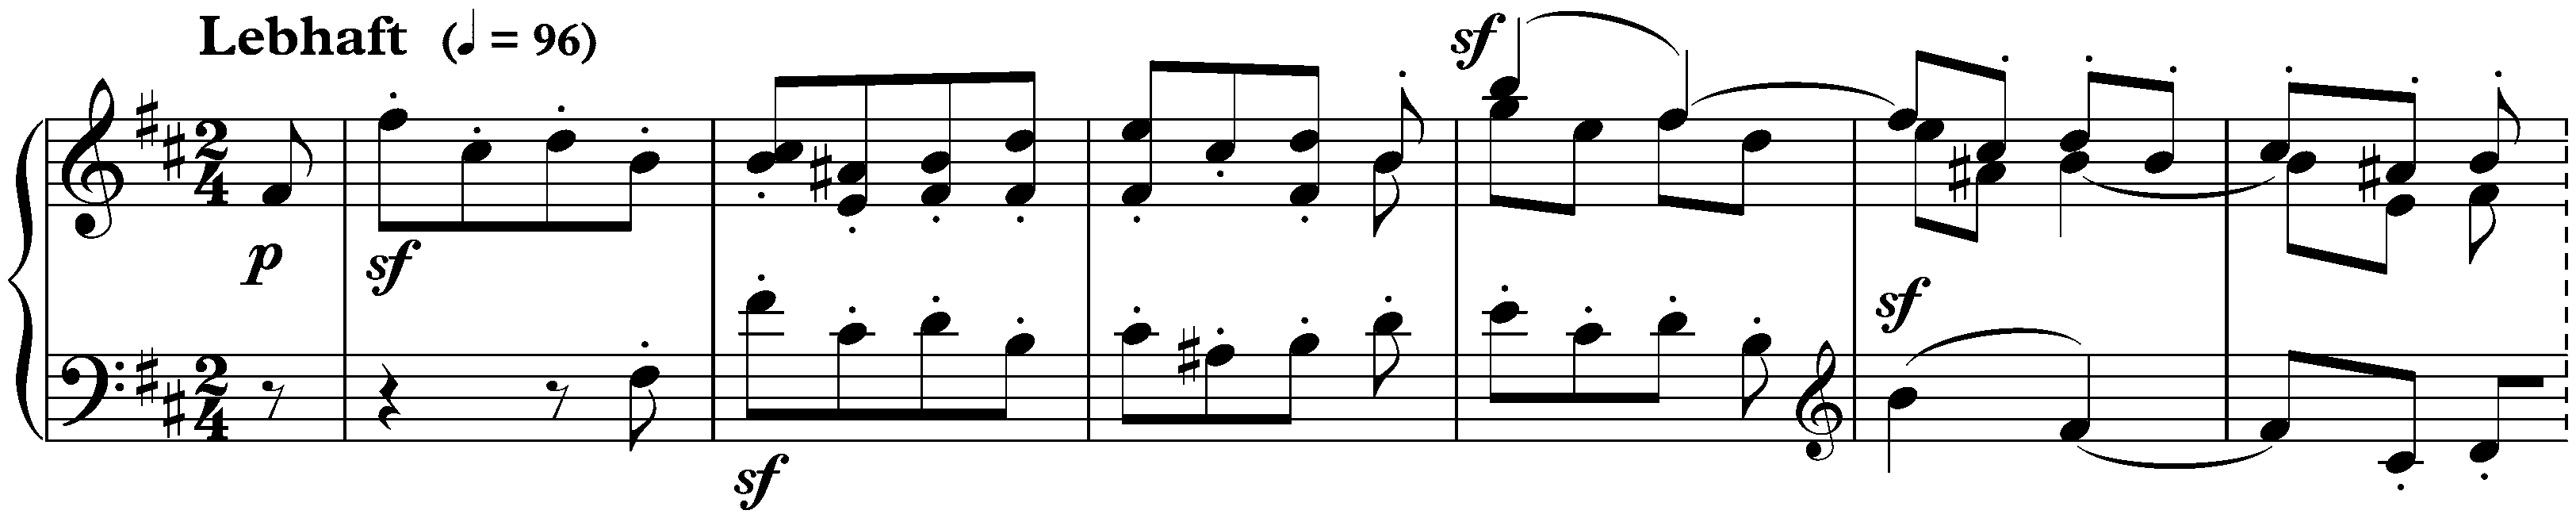 Sonate für die Jugend in D major, op. 118 no. 2; 2. Canon: Lebhaft